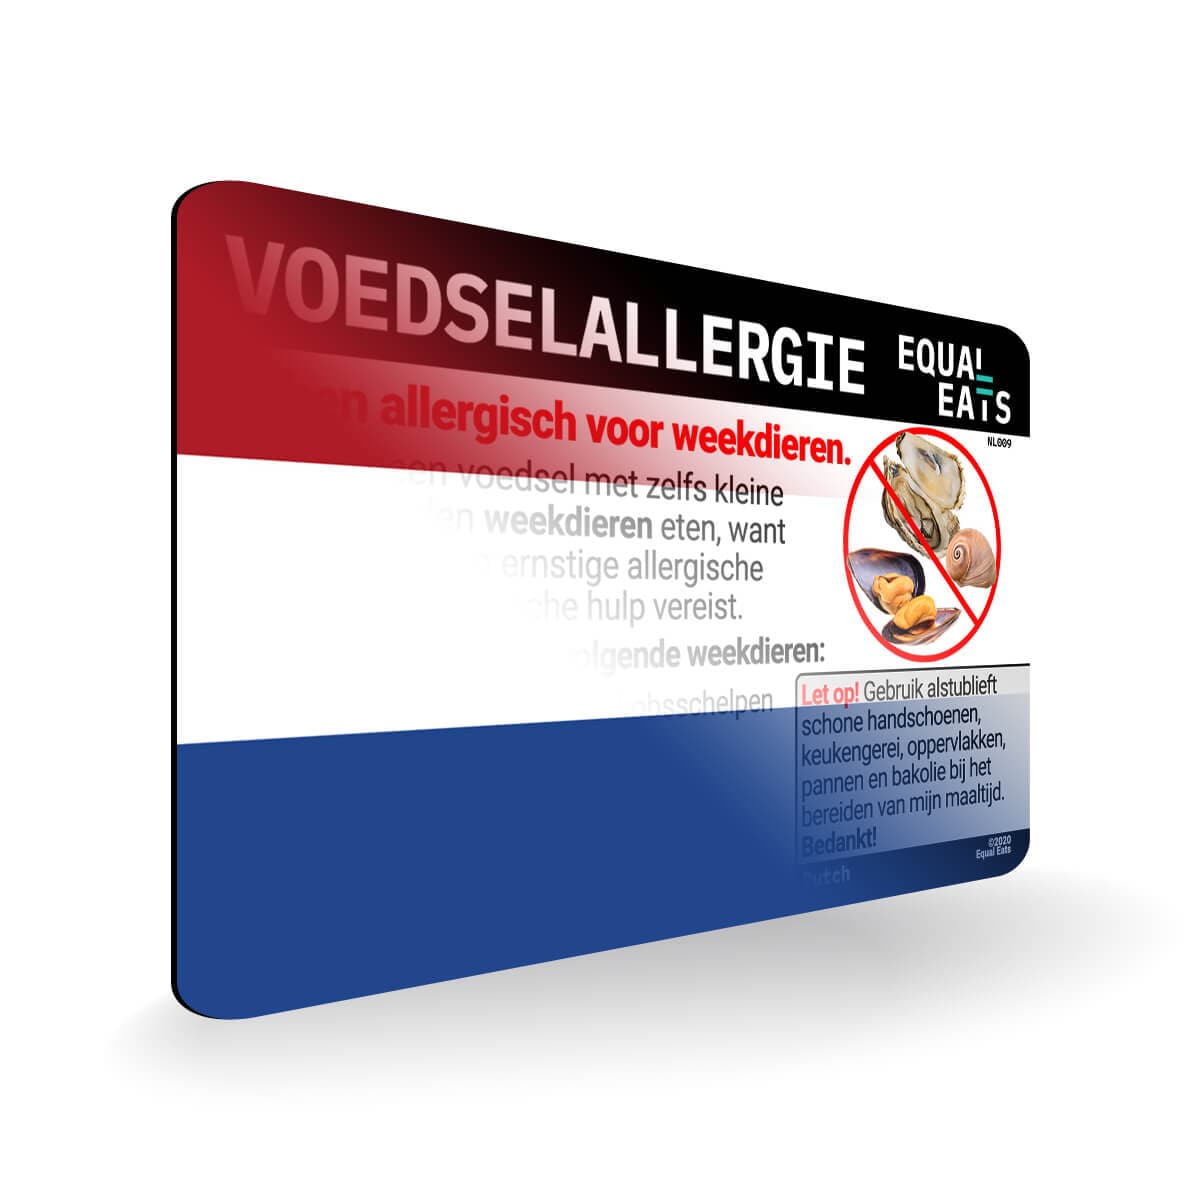 Mollusk Allergy in Dutch. Mollusk Allergy Card for Netherlands